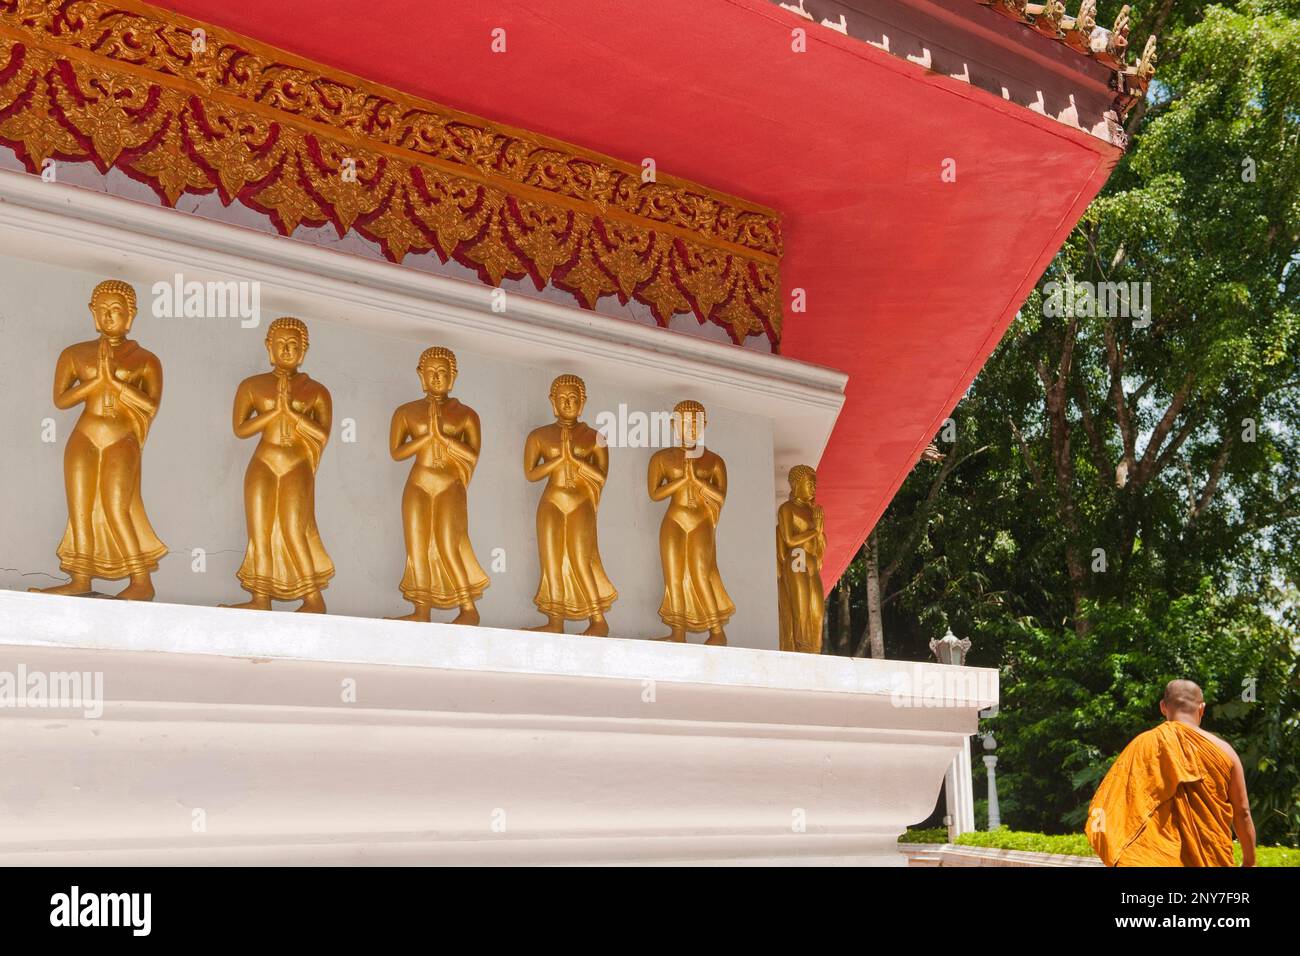 Golden Buddha statues, Wat Bang Riang, Buddhist temple, Thap Put, Amphoe hap Put, Phang Nga province, Thailand, Southeast Asia Stock Photo